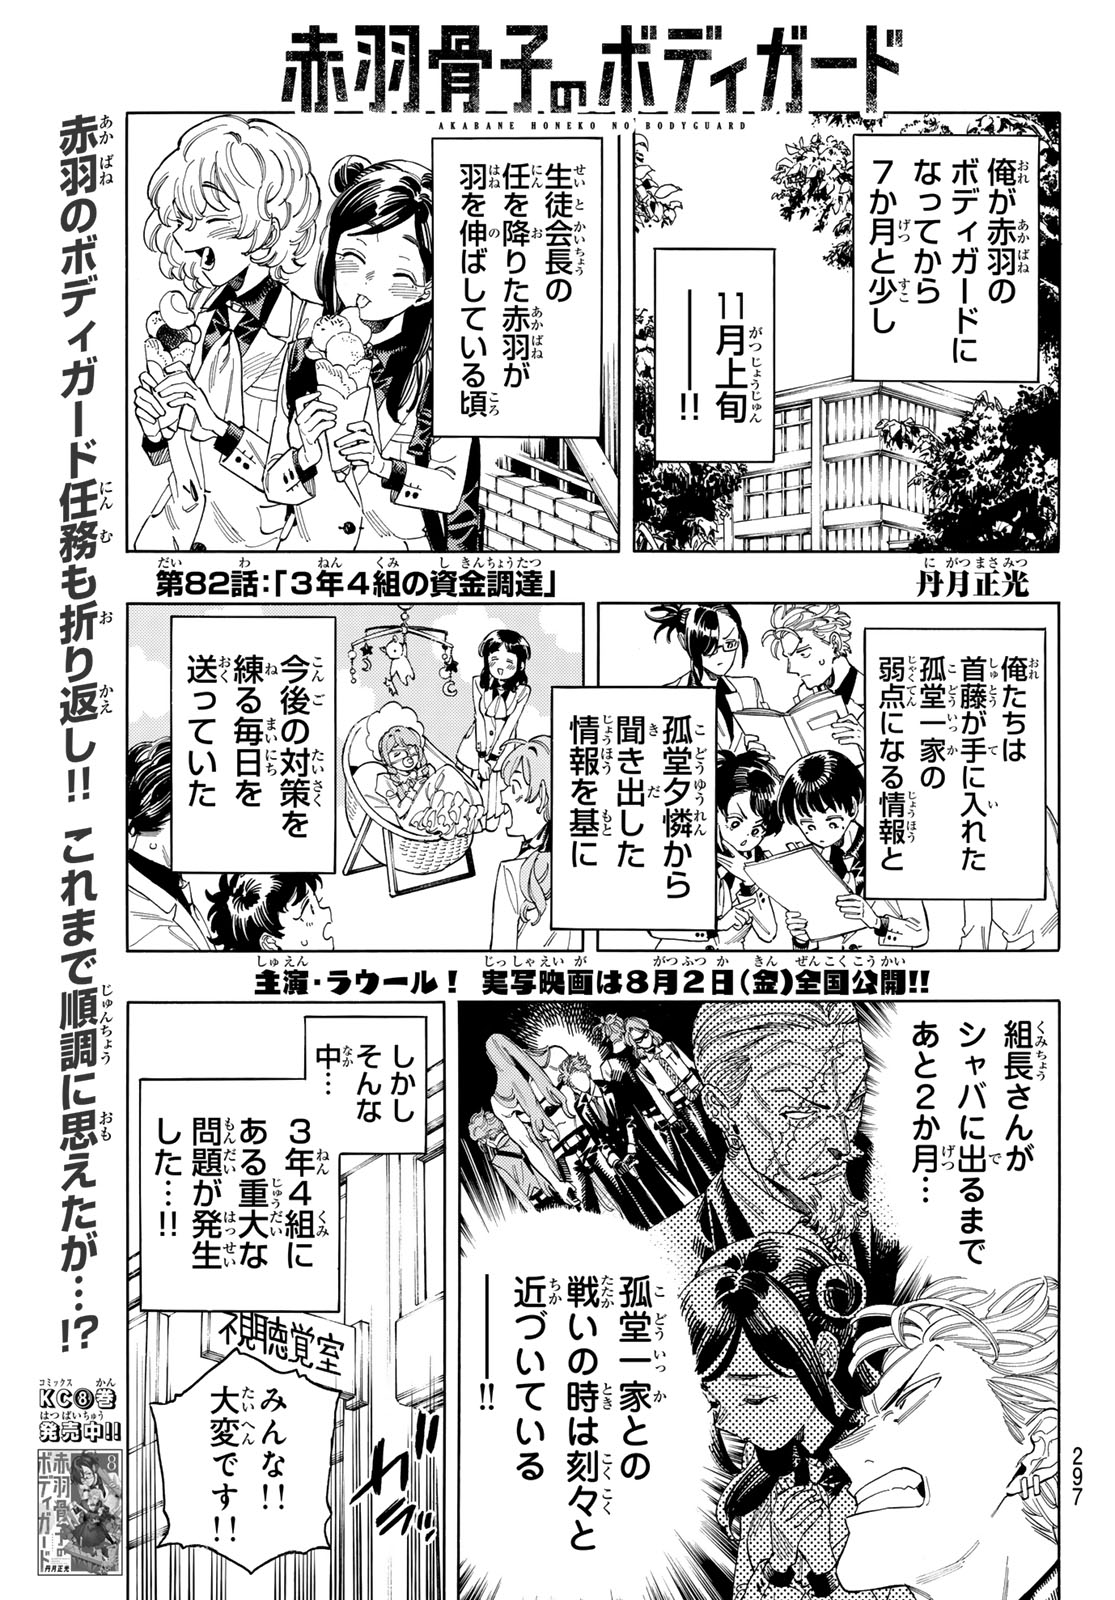 Akabane Honeko no Bodyguard - Chapter 82 - Page 1